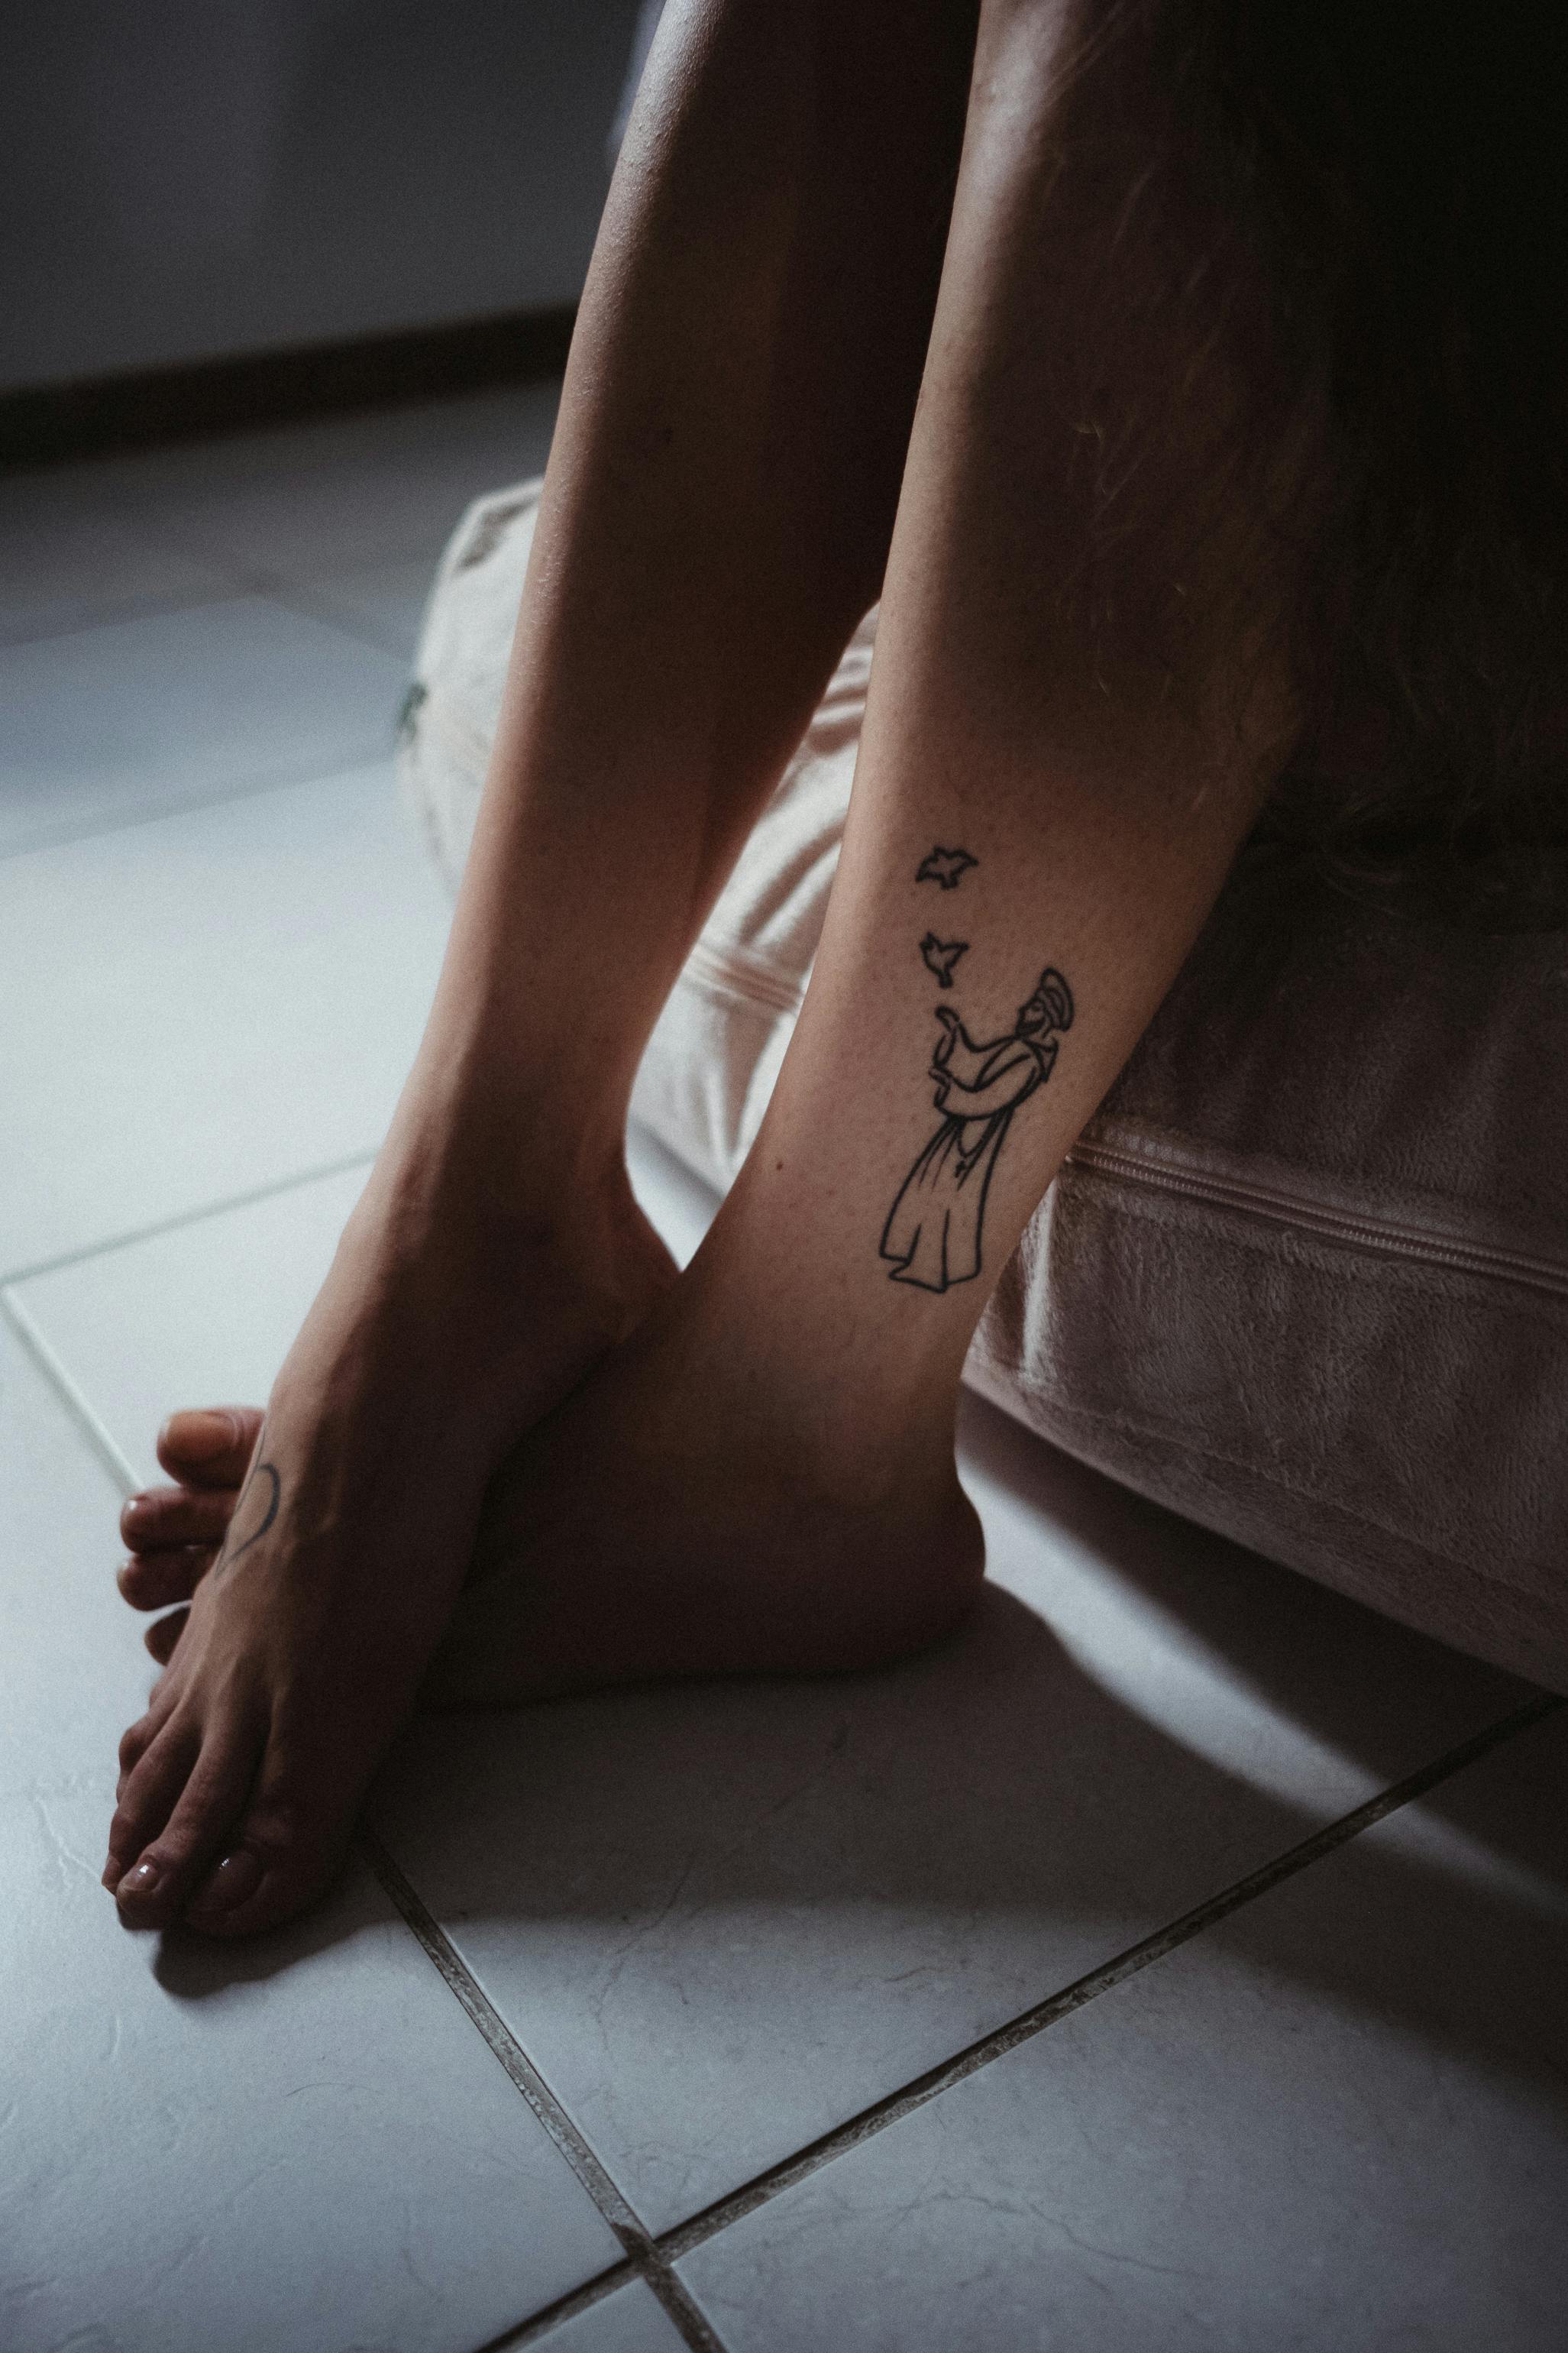 Tattoo uploaded by Inkology Nz • om symbol and gypsy moth foot tattoos •  Tattoodo